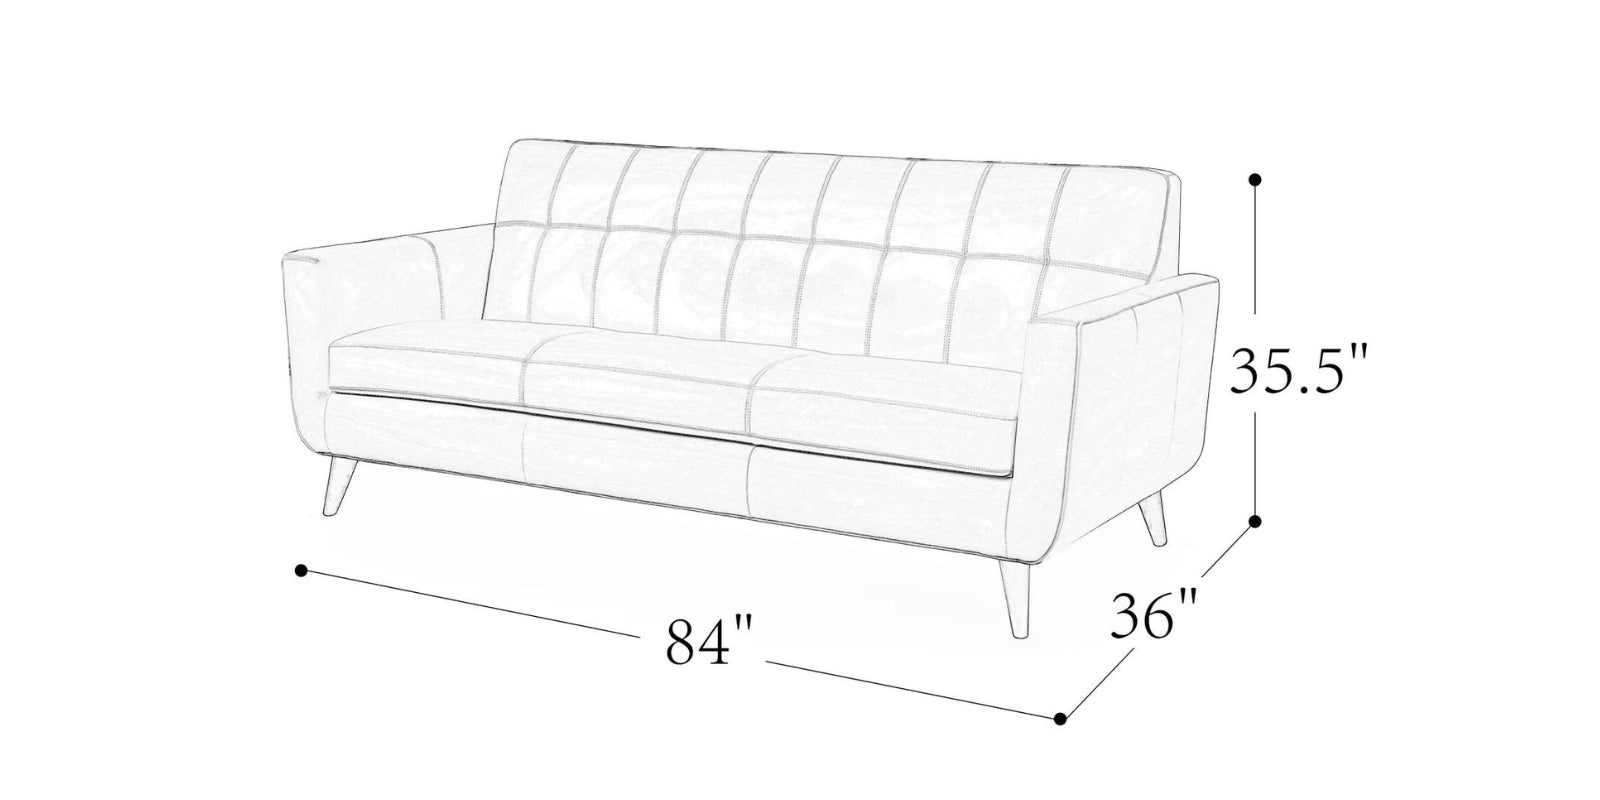 Sunny Leatherette 3 Seater Sofa in White Finish